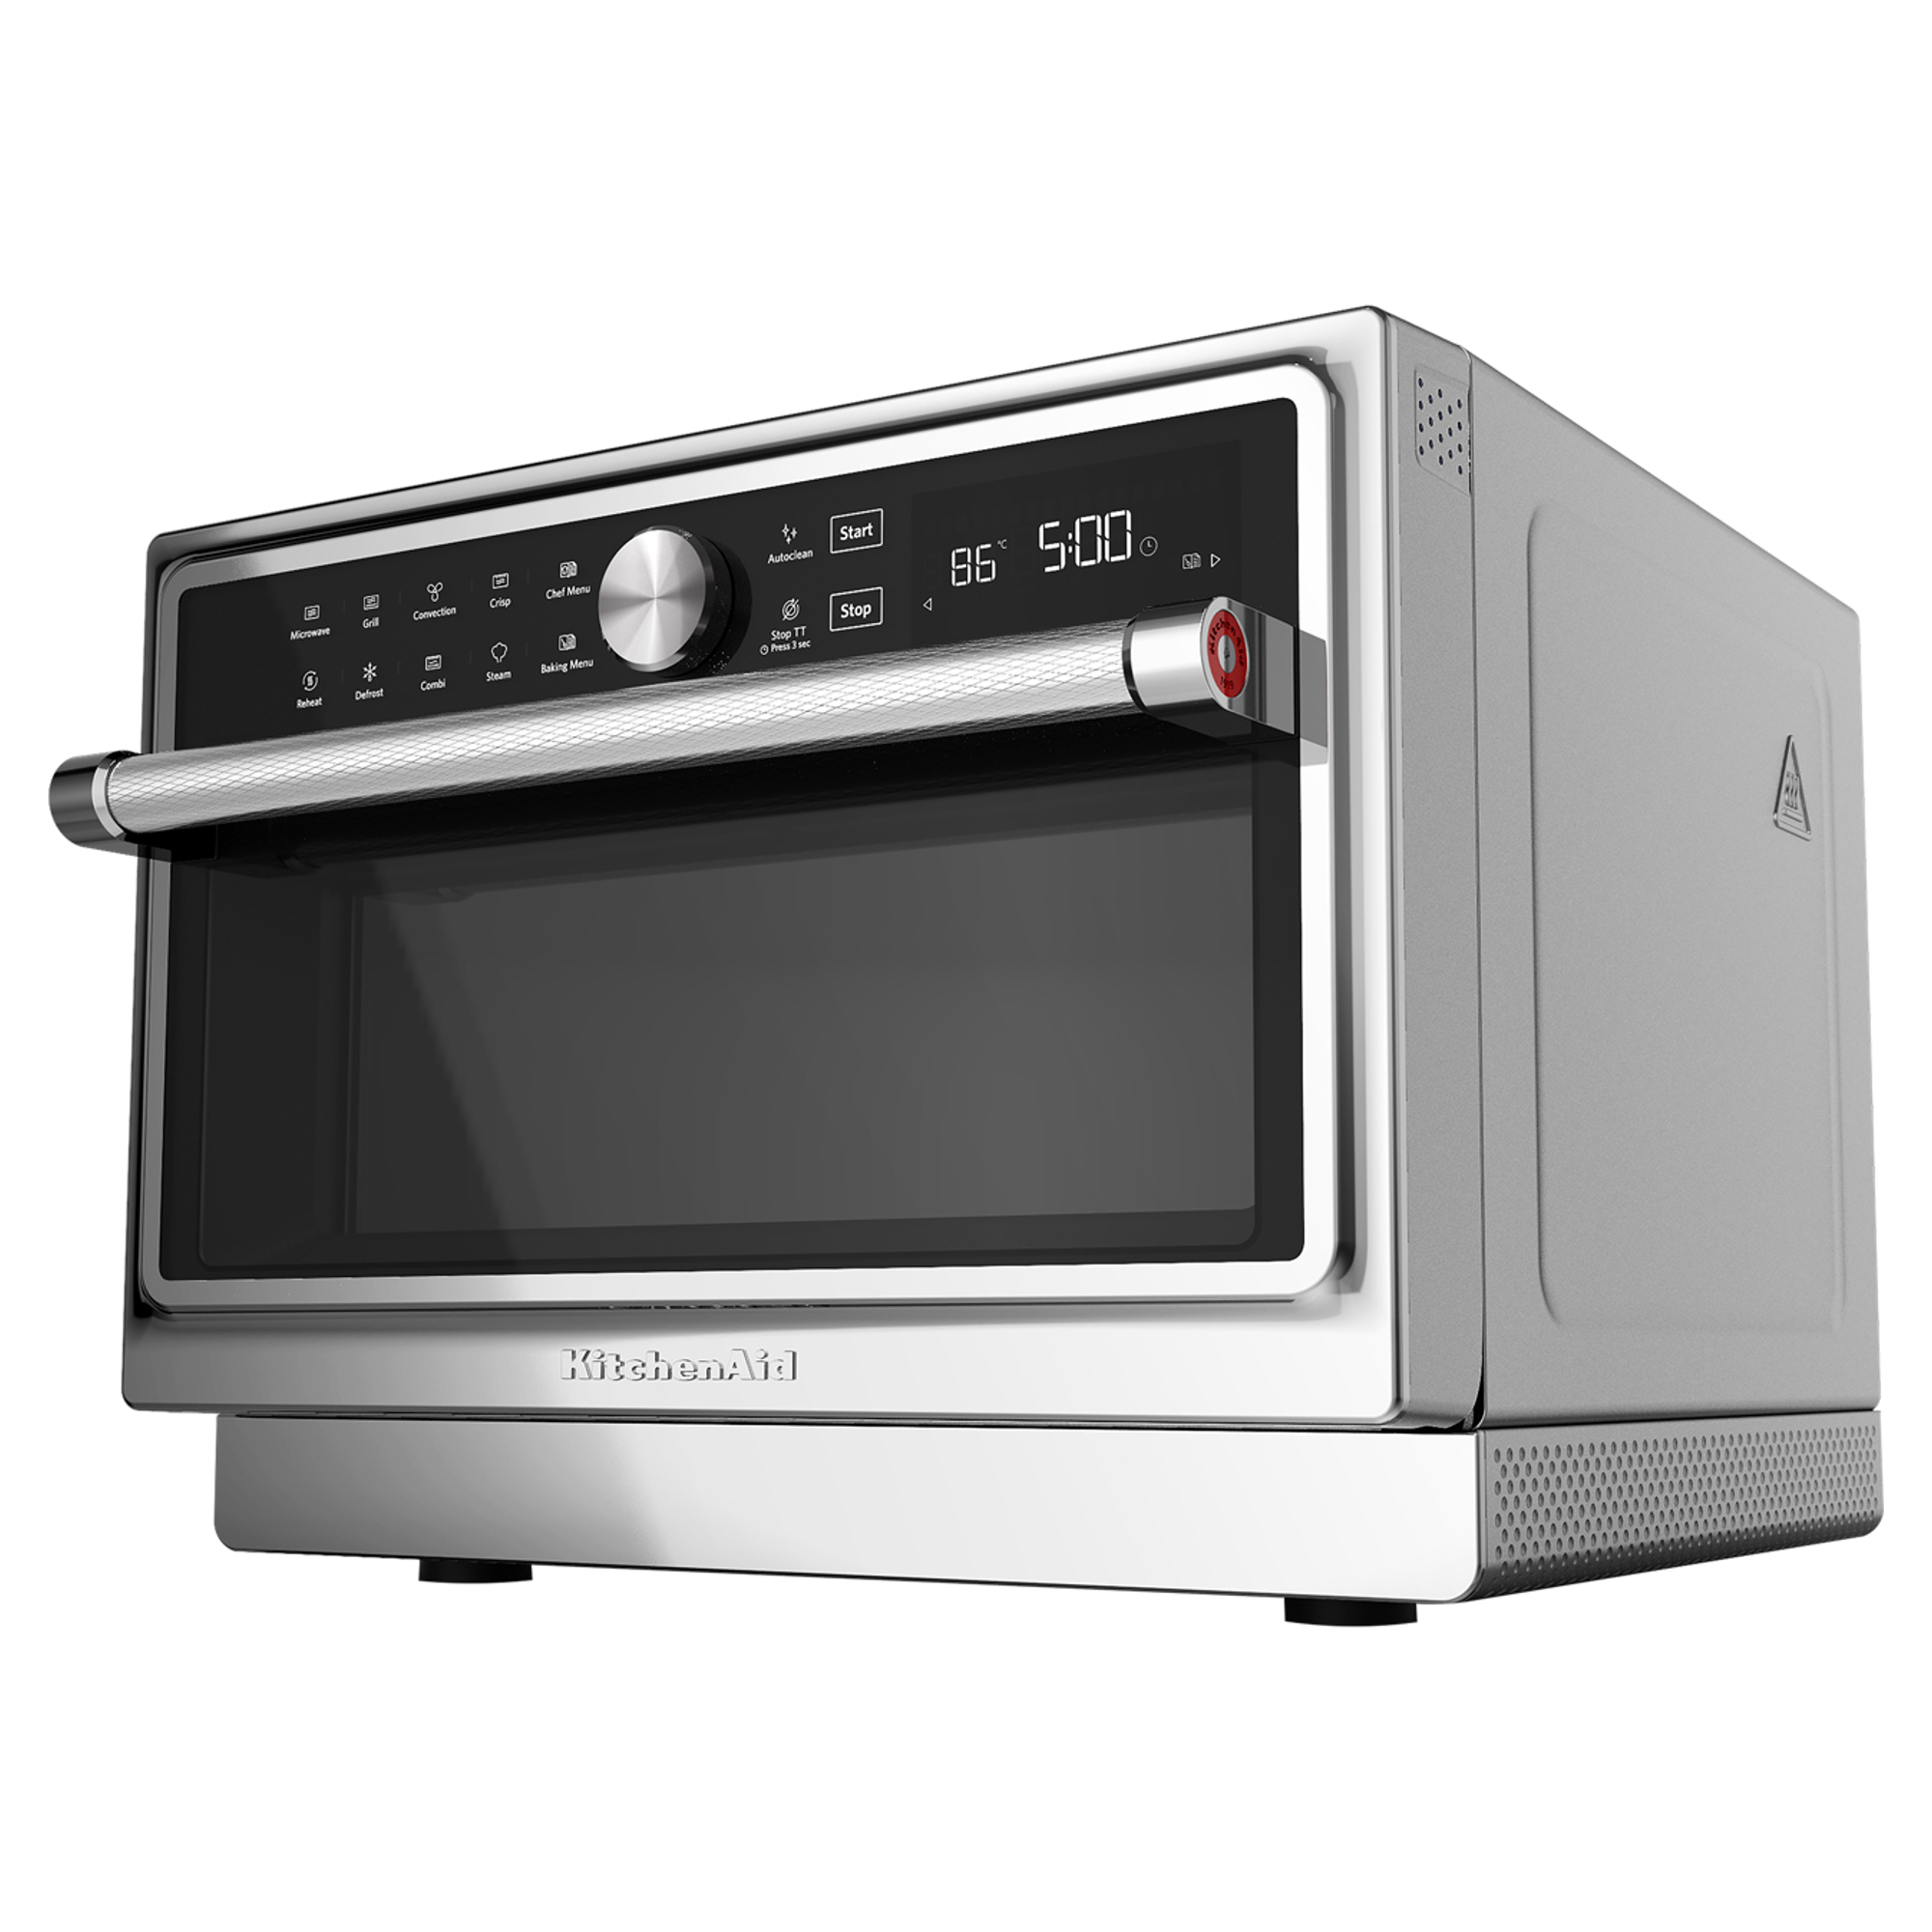 kitchen aid microwaves